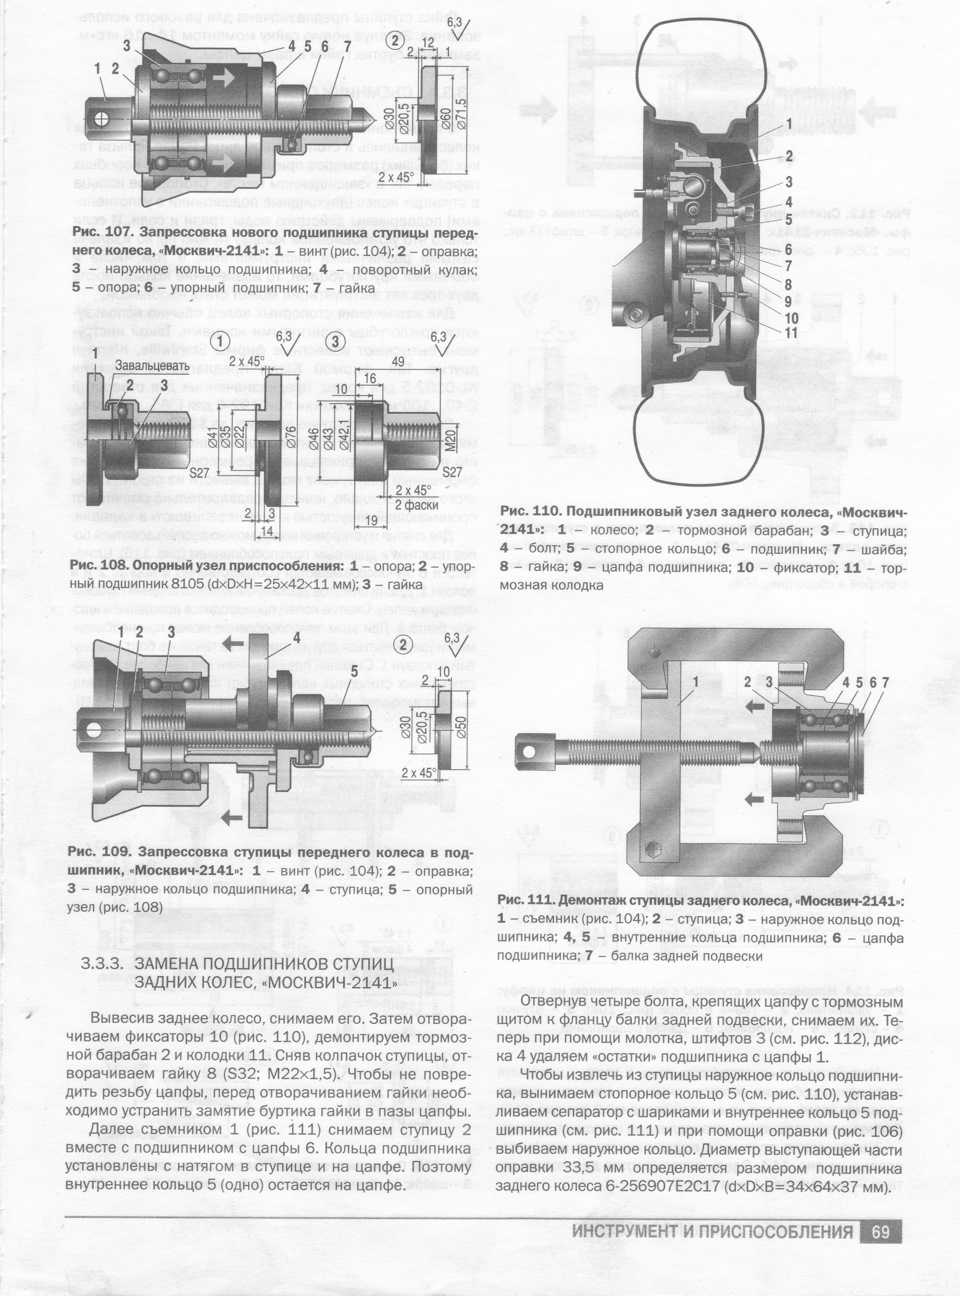 Руководство по ремонту азлк 2141 (москвич) 1986-2000 г.в. 1.0 азлк 2141